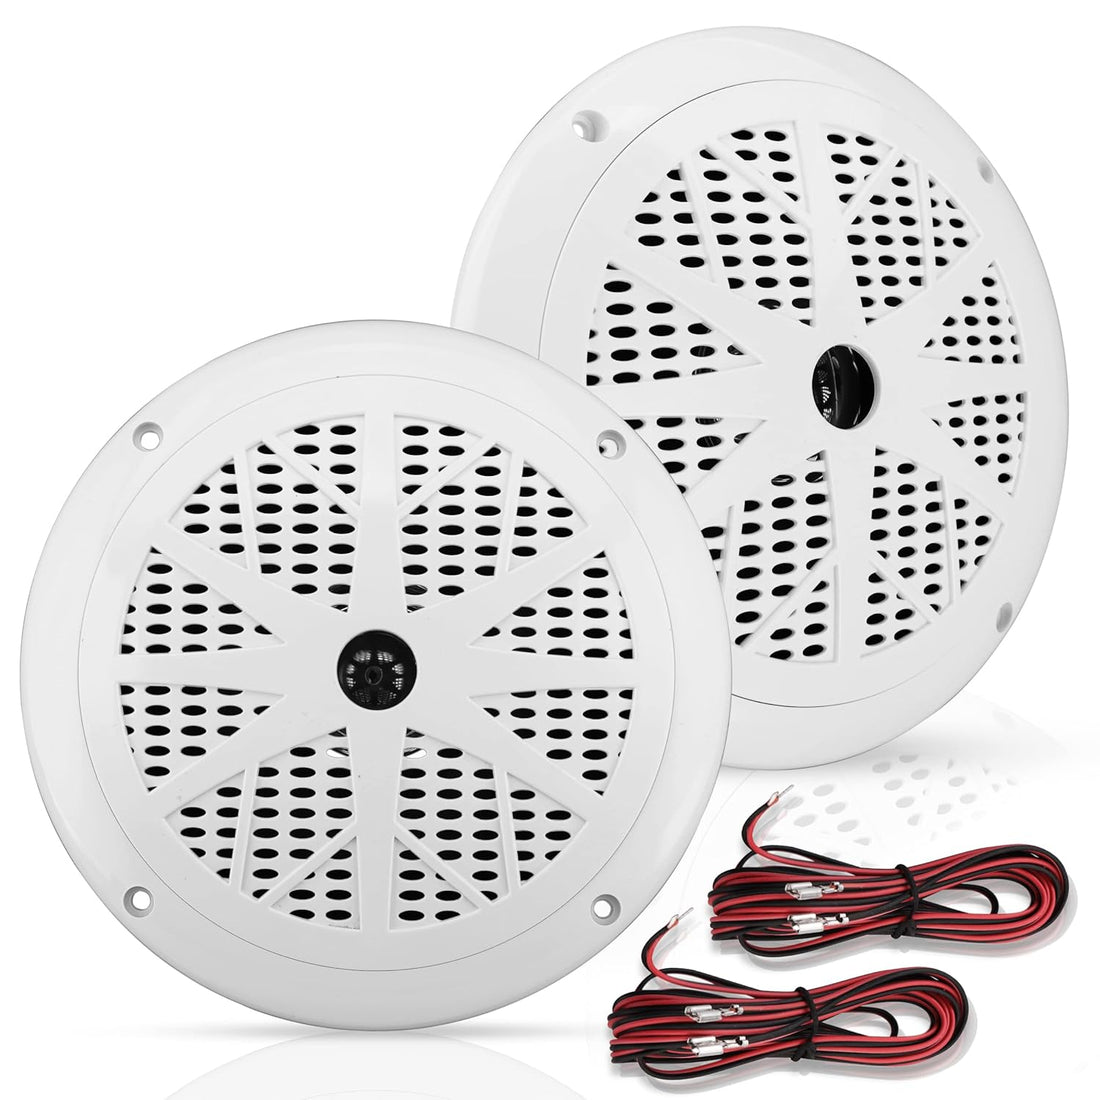 Pyle PLMR61W Dual 6.5'' Waterproof Marine Speakers, Full Range Stereo Sound, 120 Watt, White (Pair)